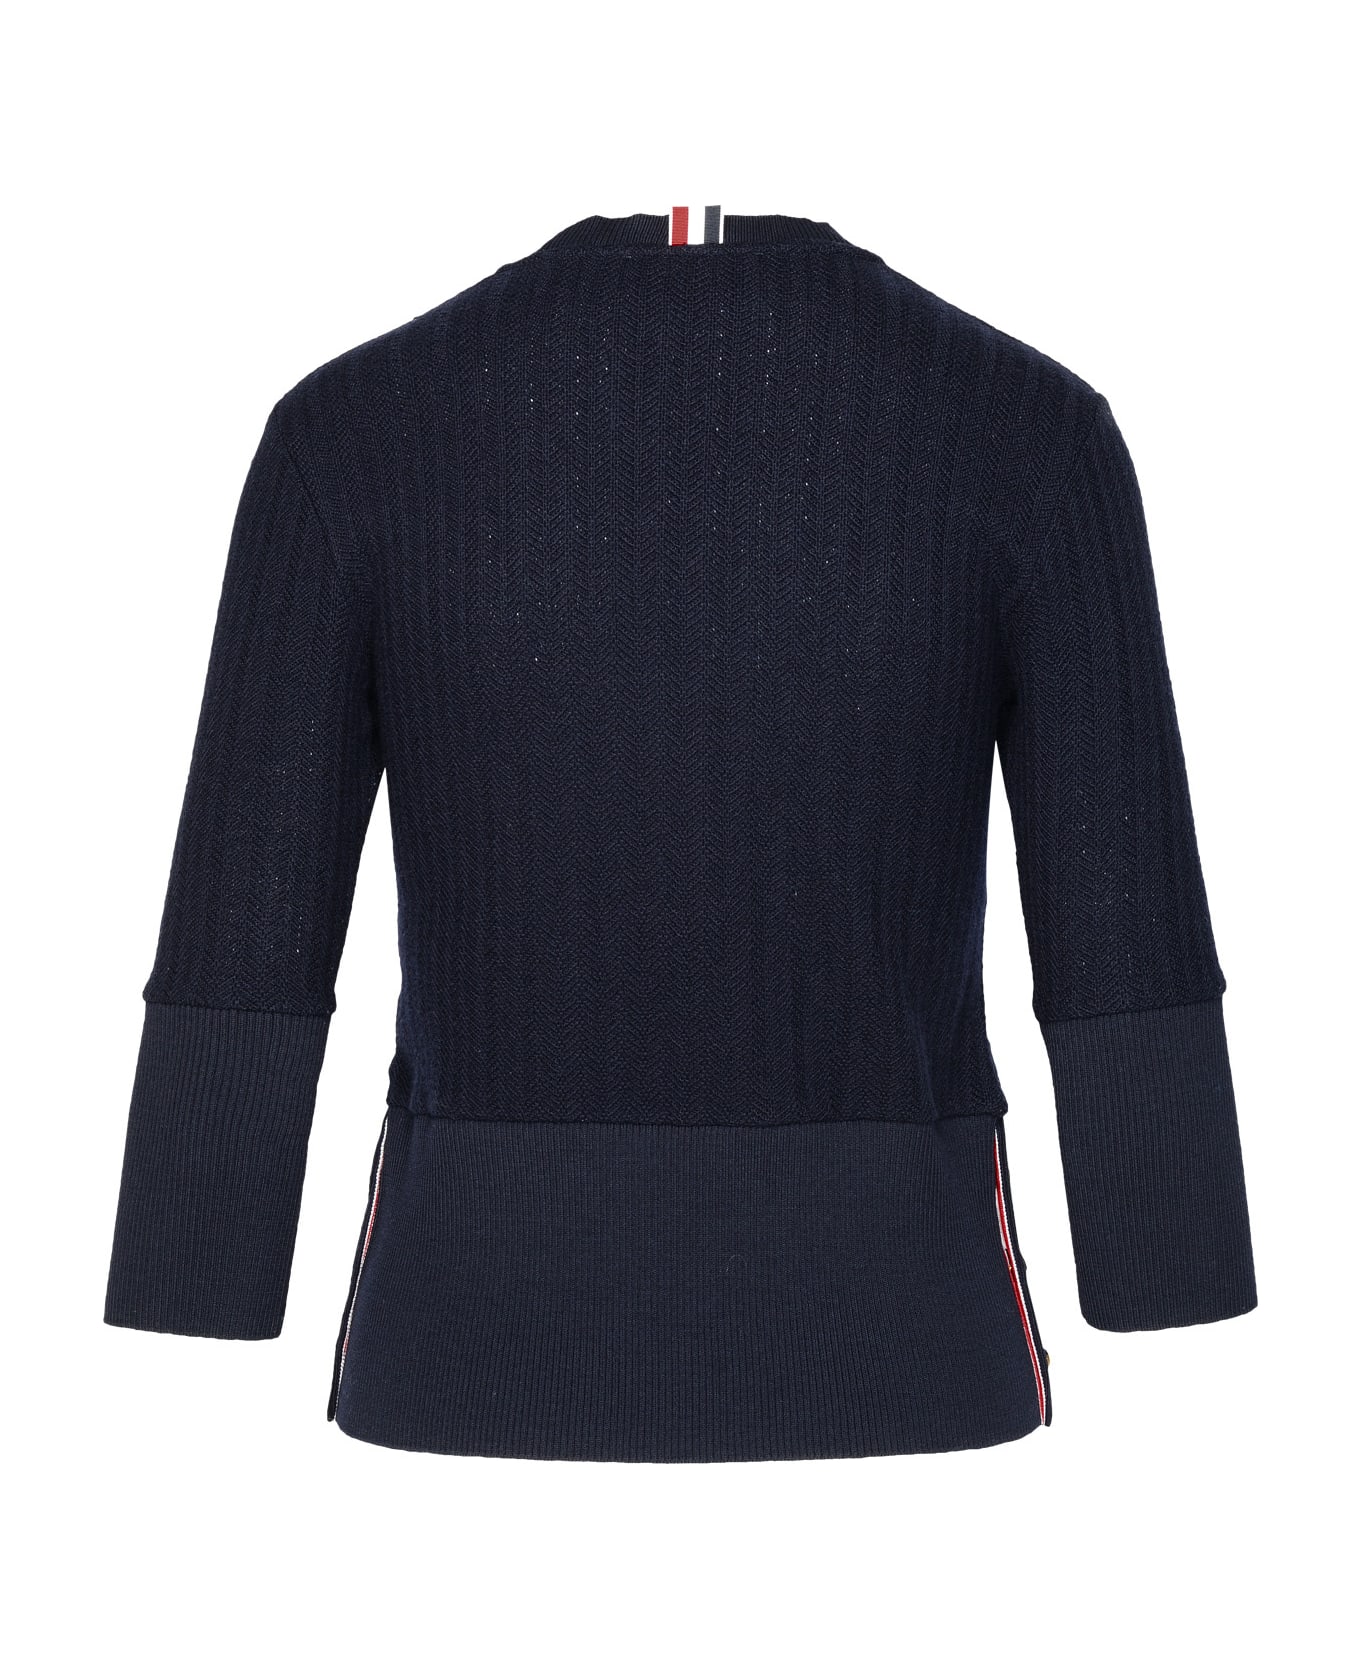 Thom Browne Navy Virgin Wool Sweater - Navy ニットウェア